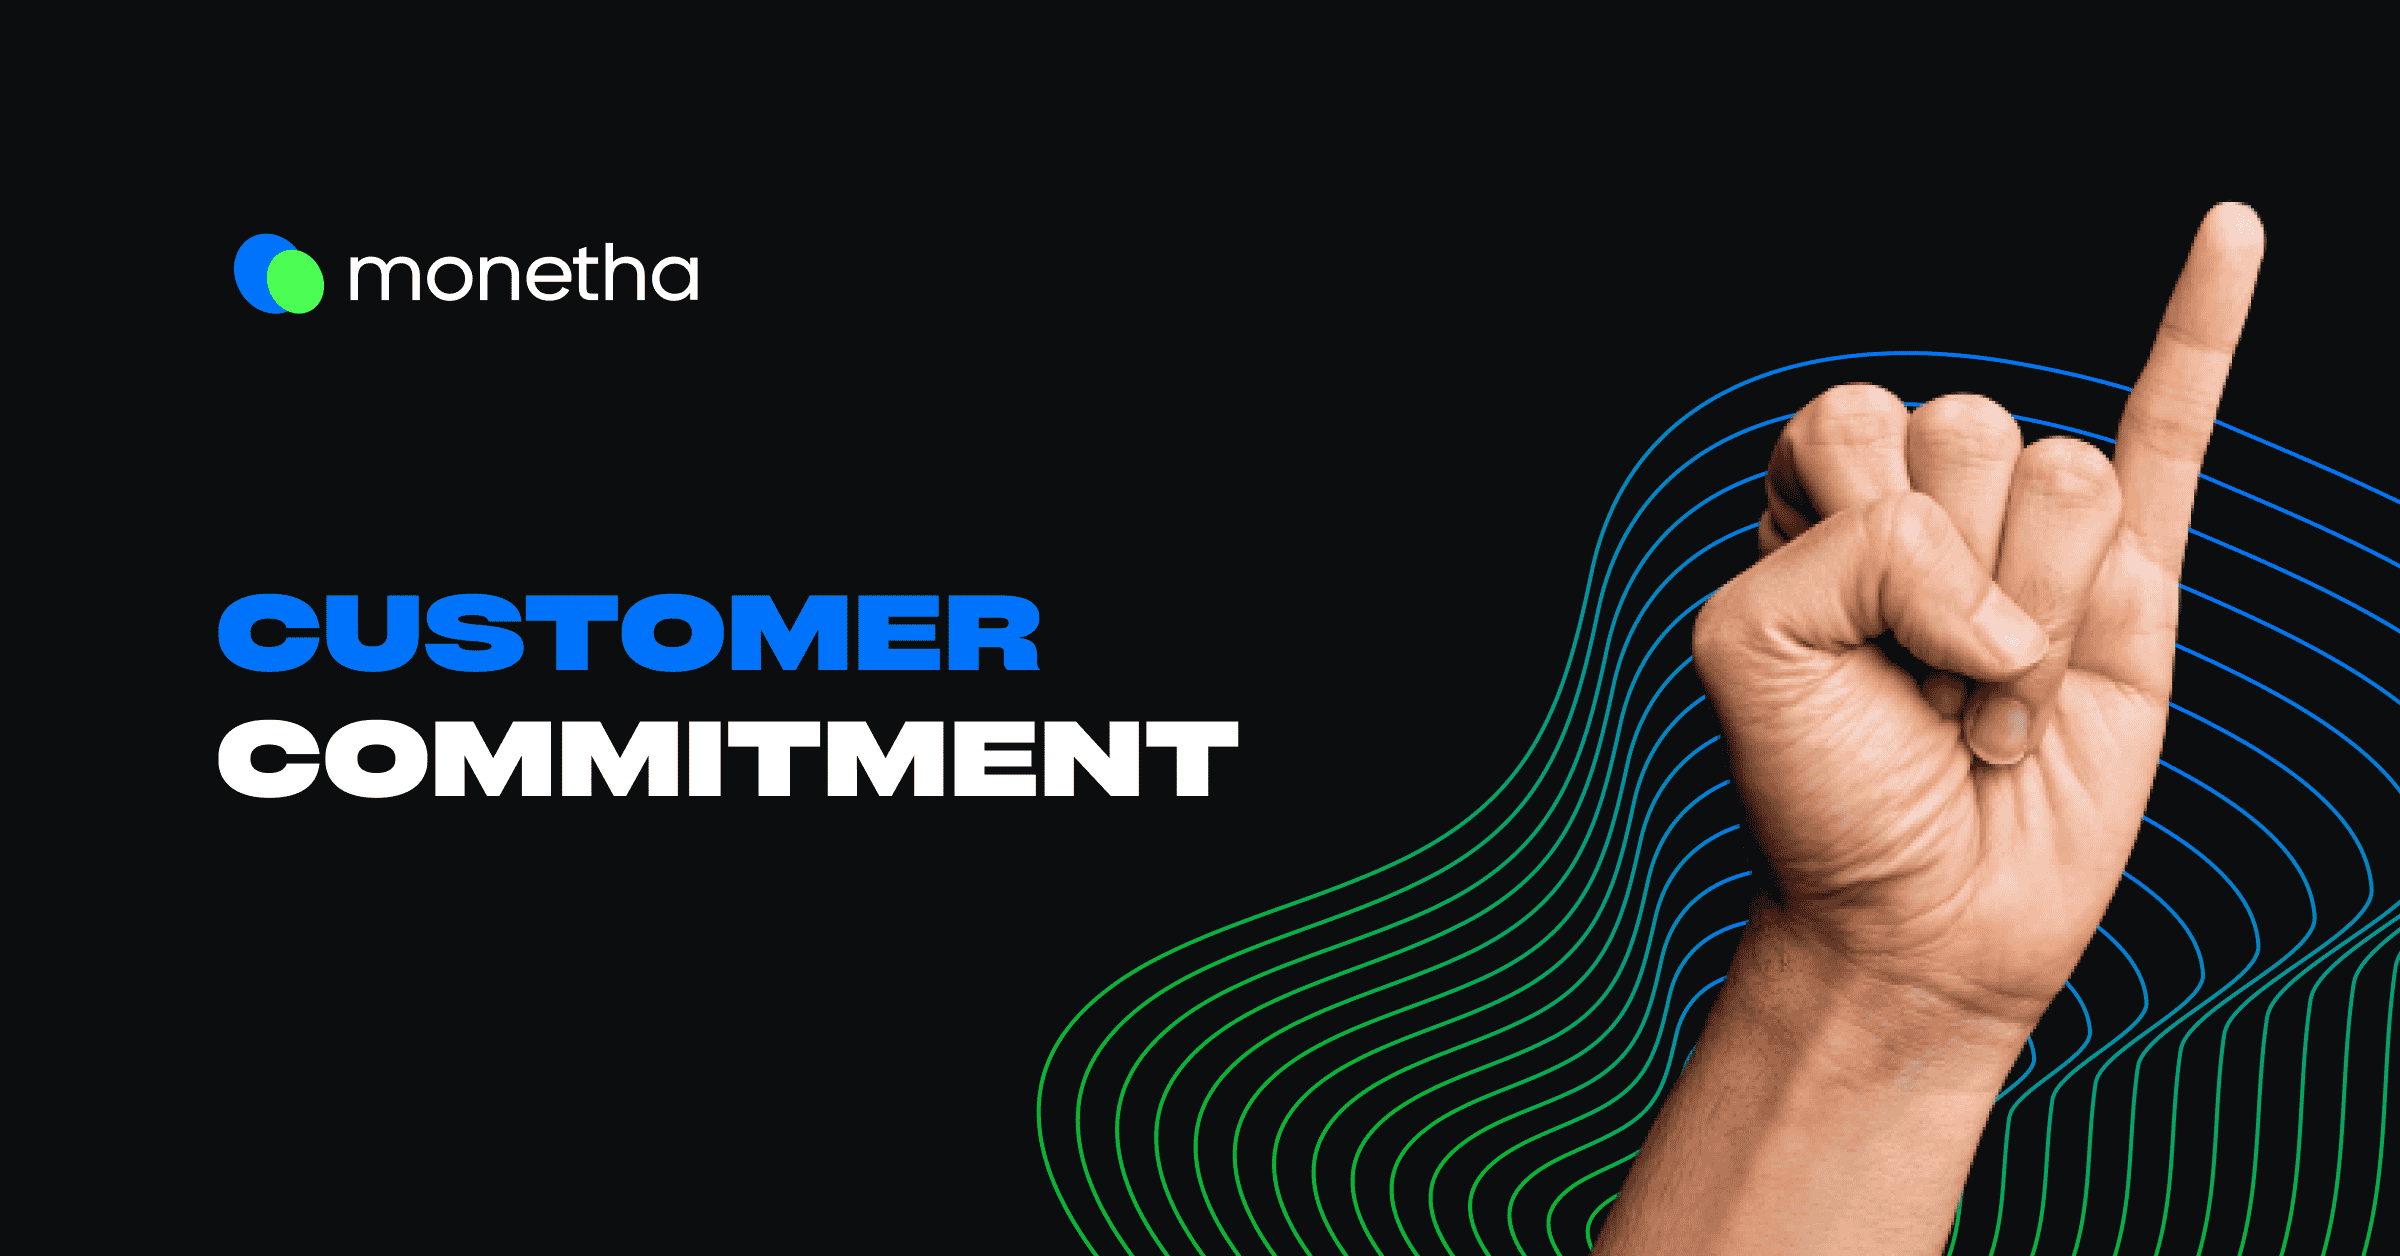 customer commitment image 1